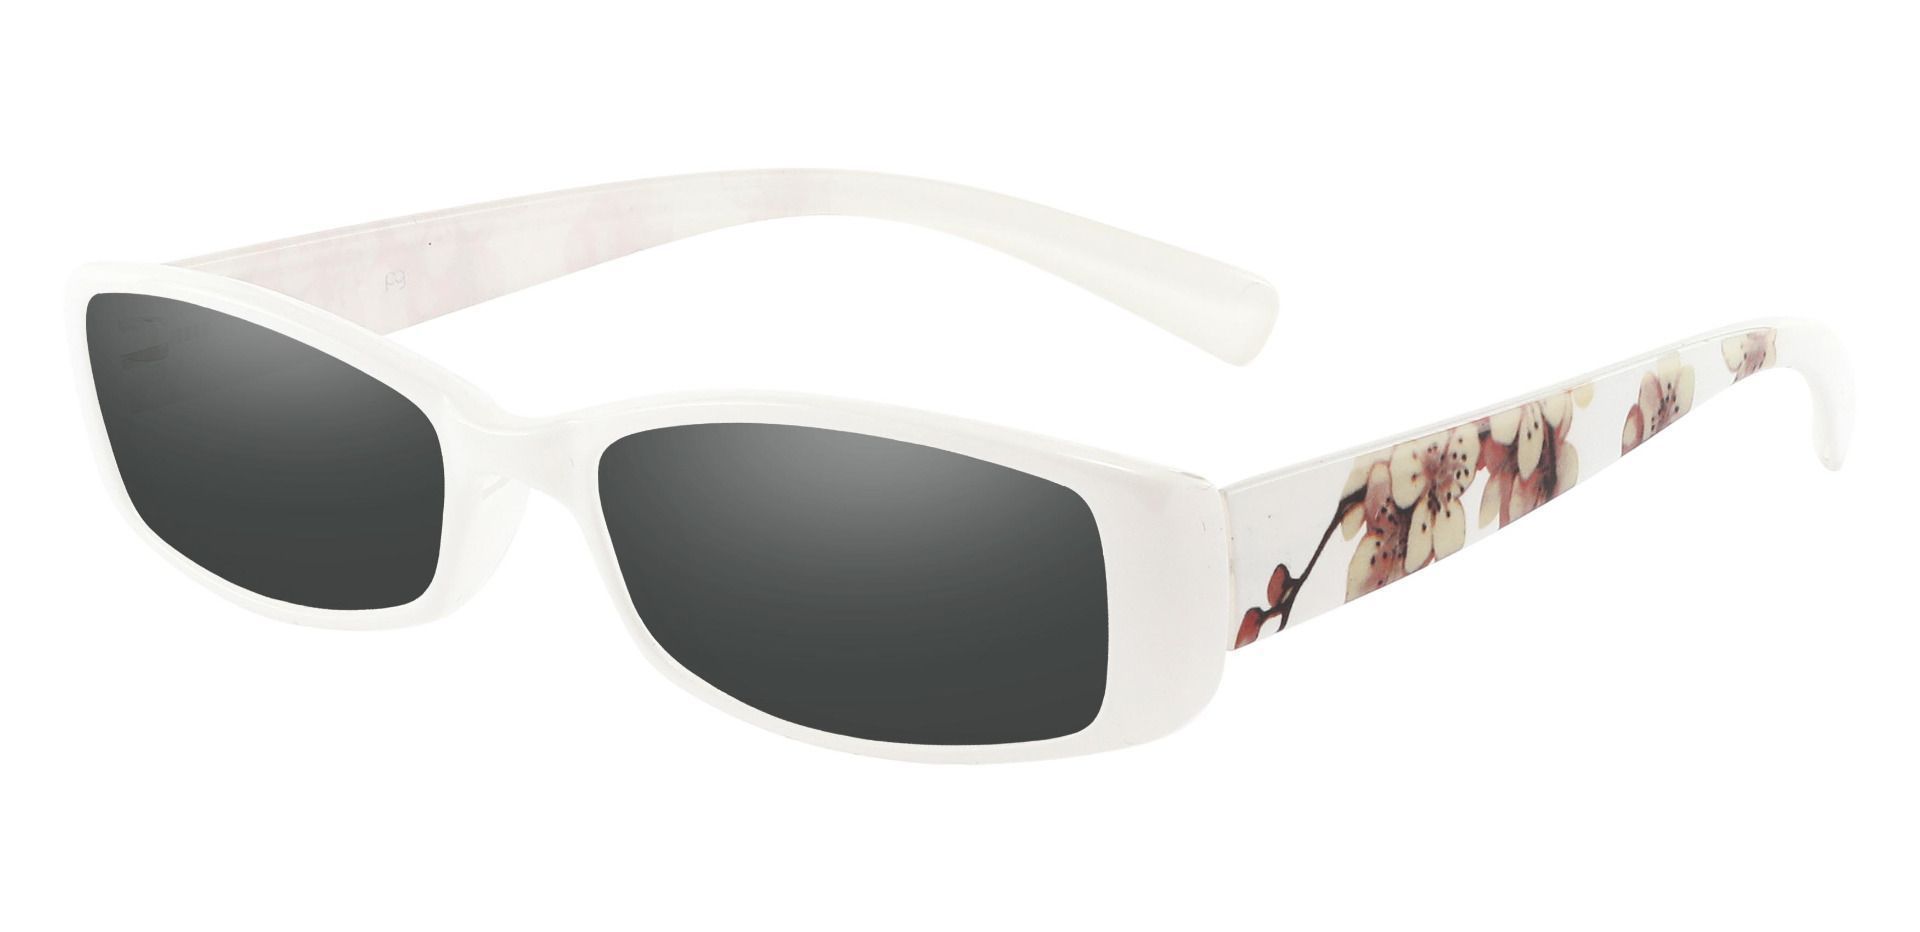 Medora Rectangle Non-Rx Sunglasses - White Frame With Gray Lenses